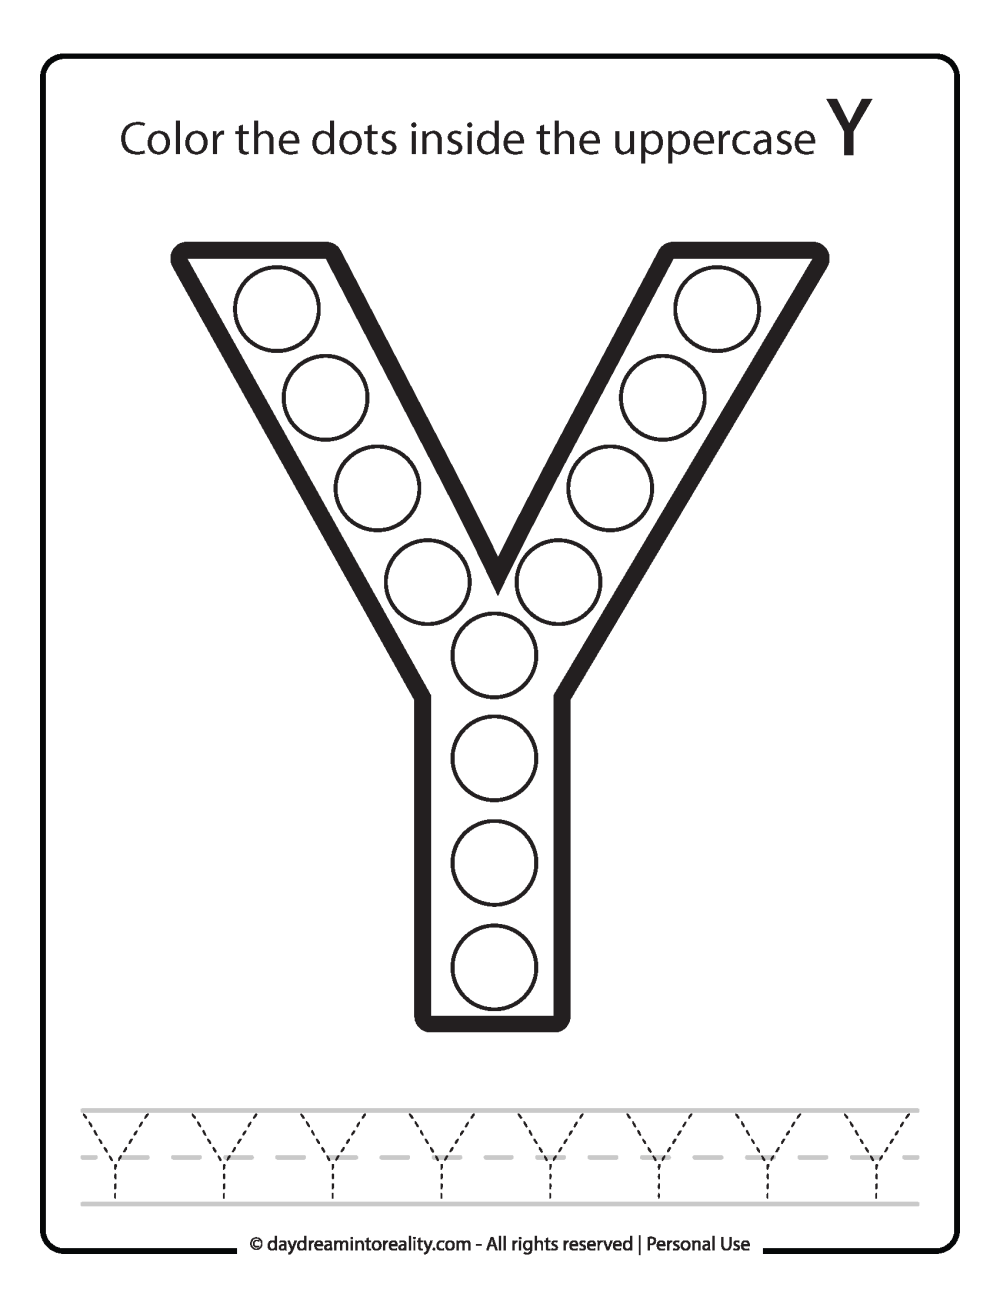 Uppercase "Y" Dot Marker Worksheet Free Printable activity for kids (preschool, kindergarten)